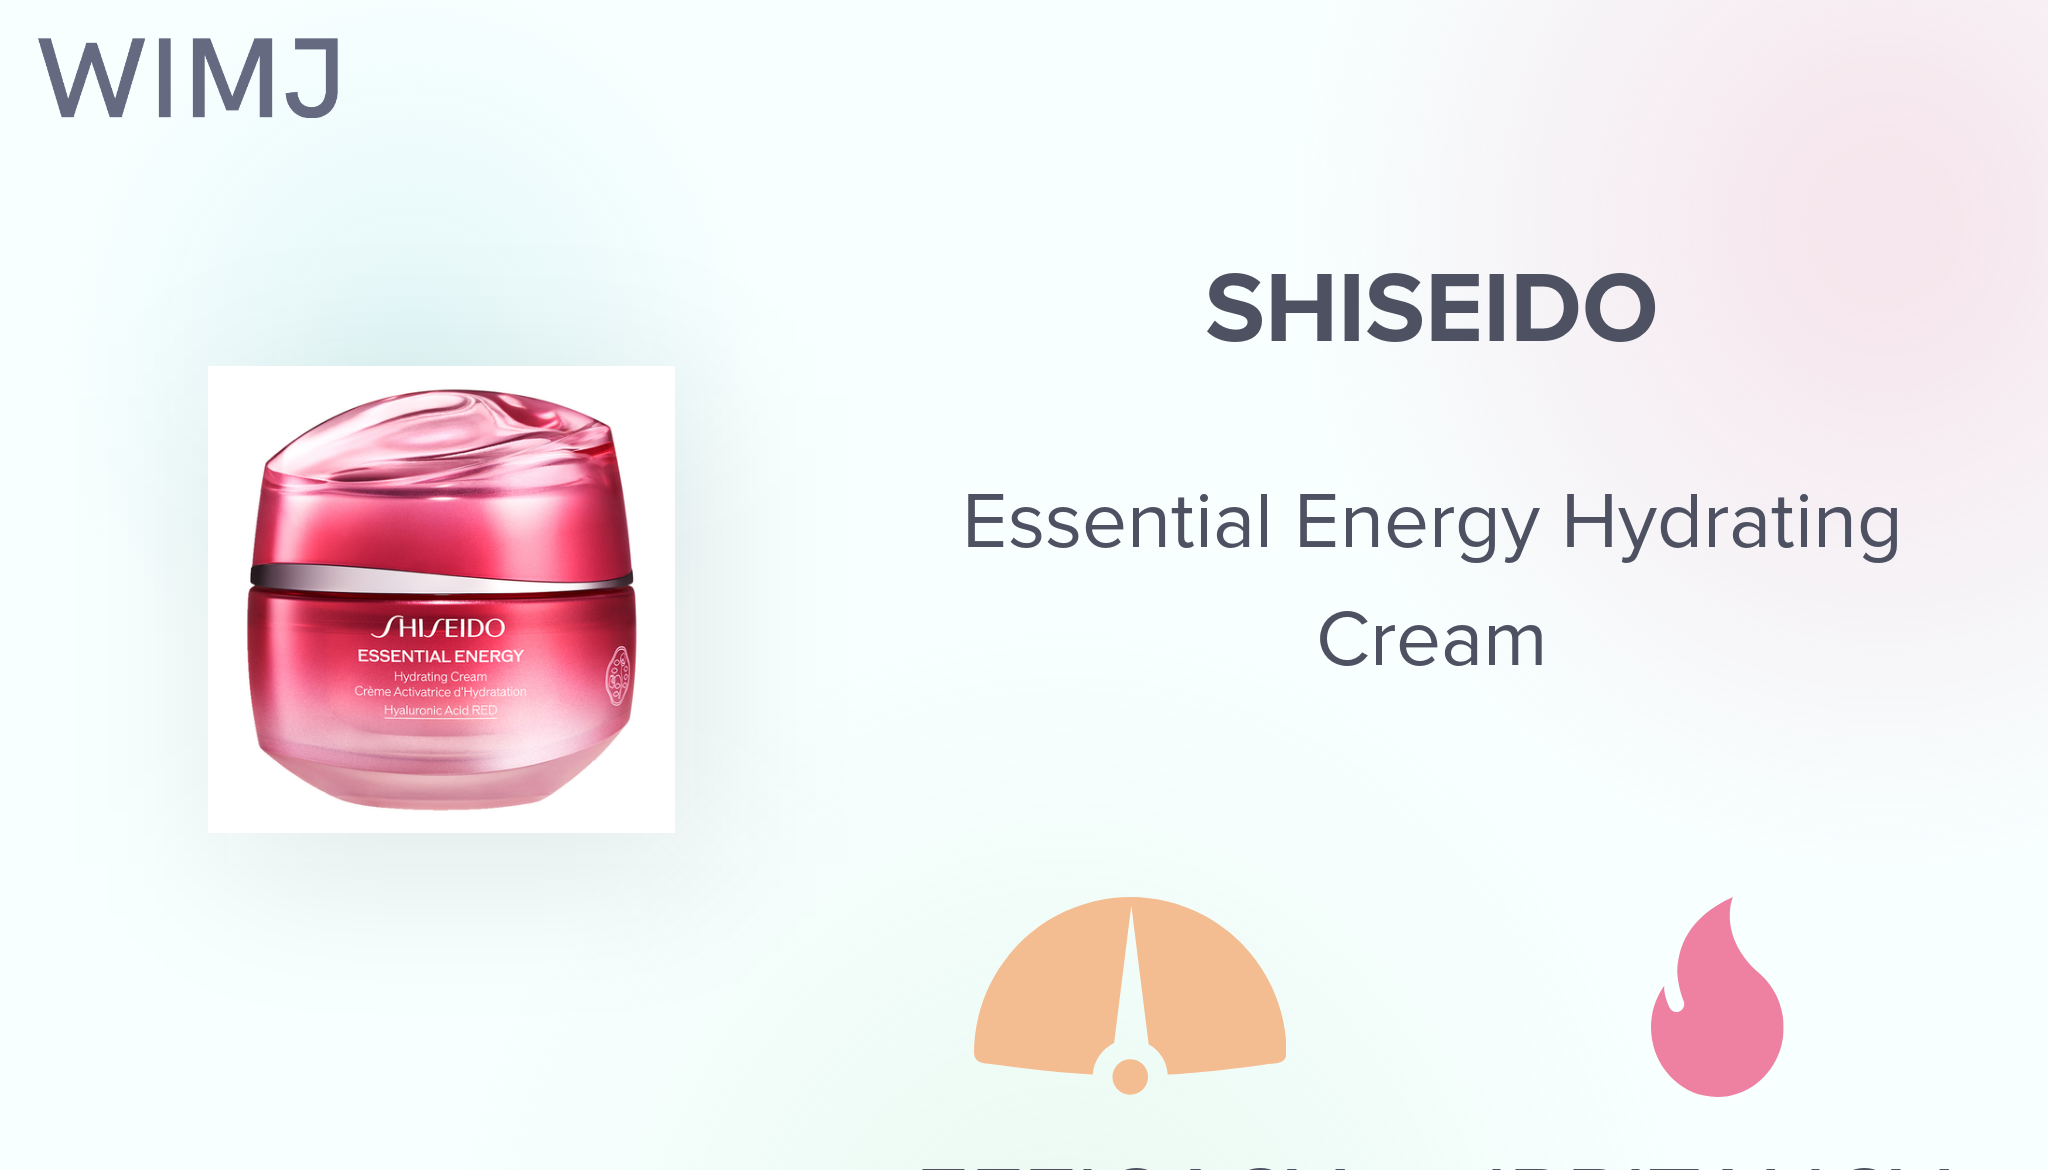 Essential Energy Hydrating Cream